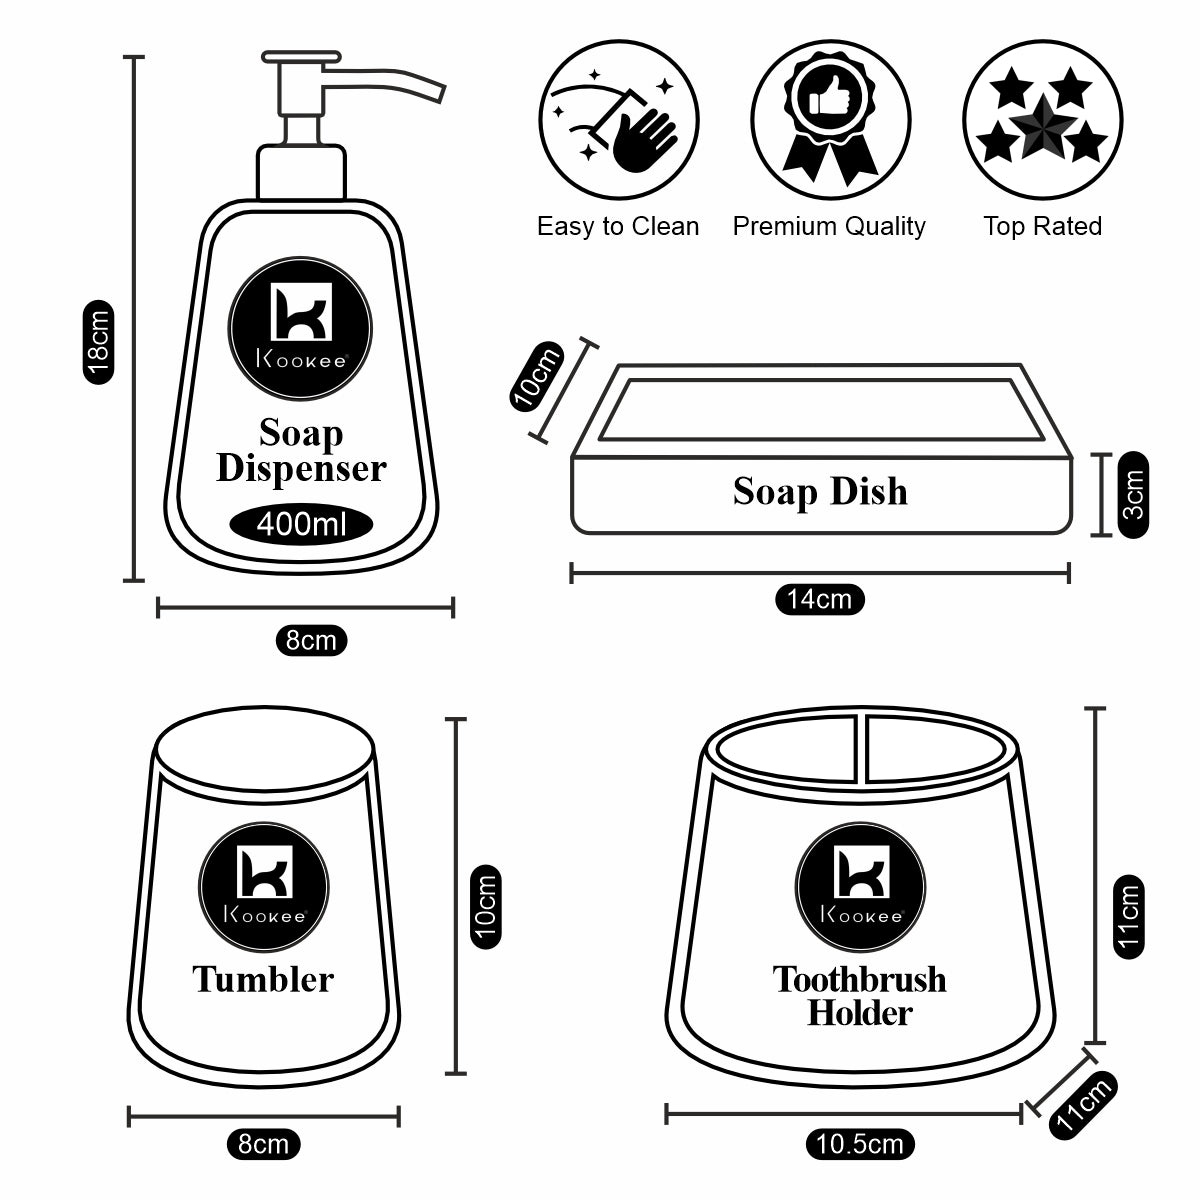 Ceramic Bathroom Accessories Set of 4 Bath Set with Soap Dispenser (8064)